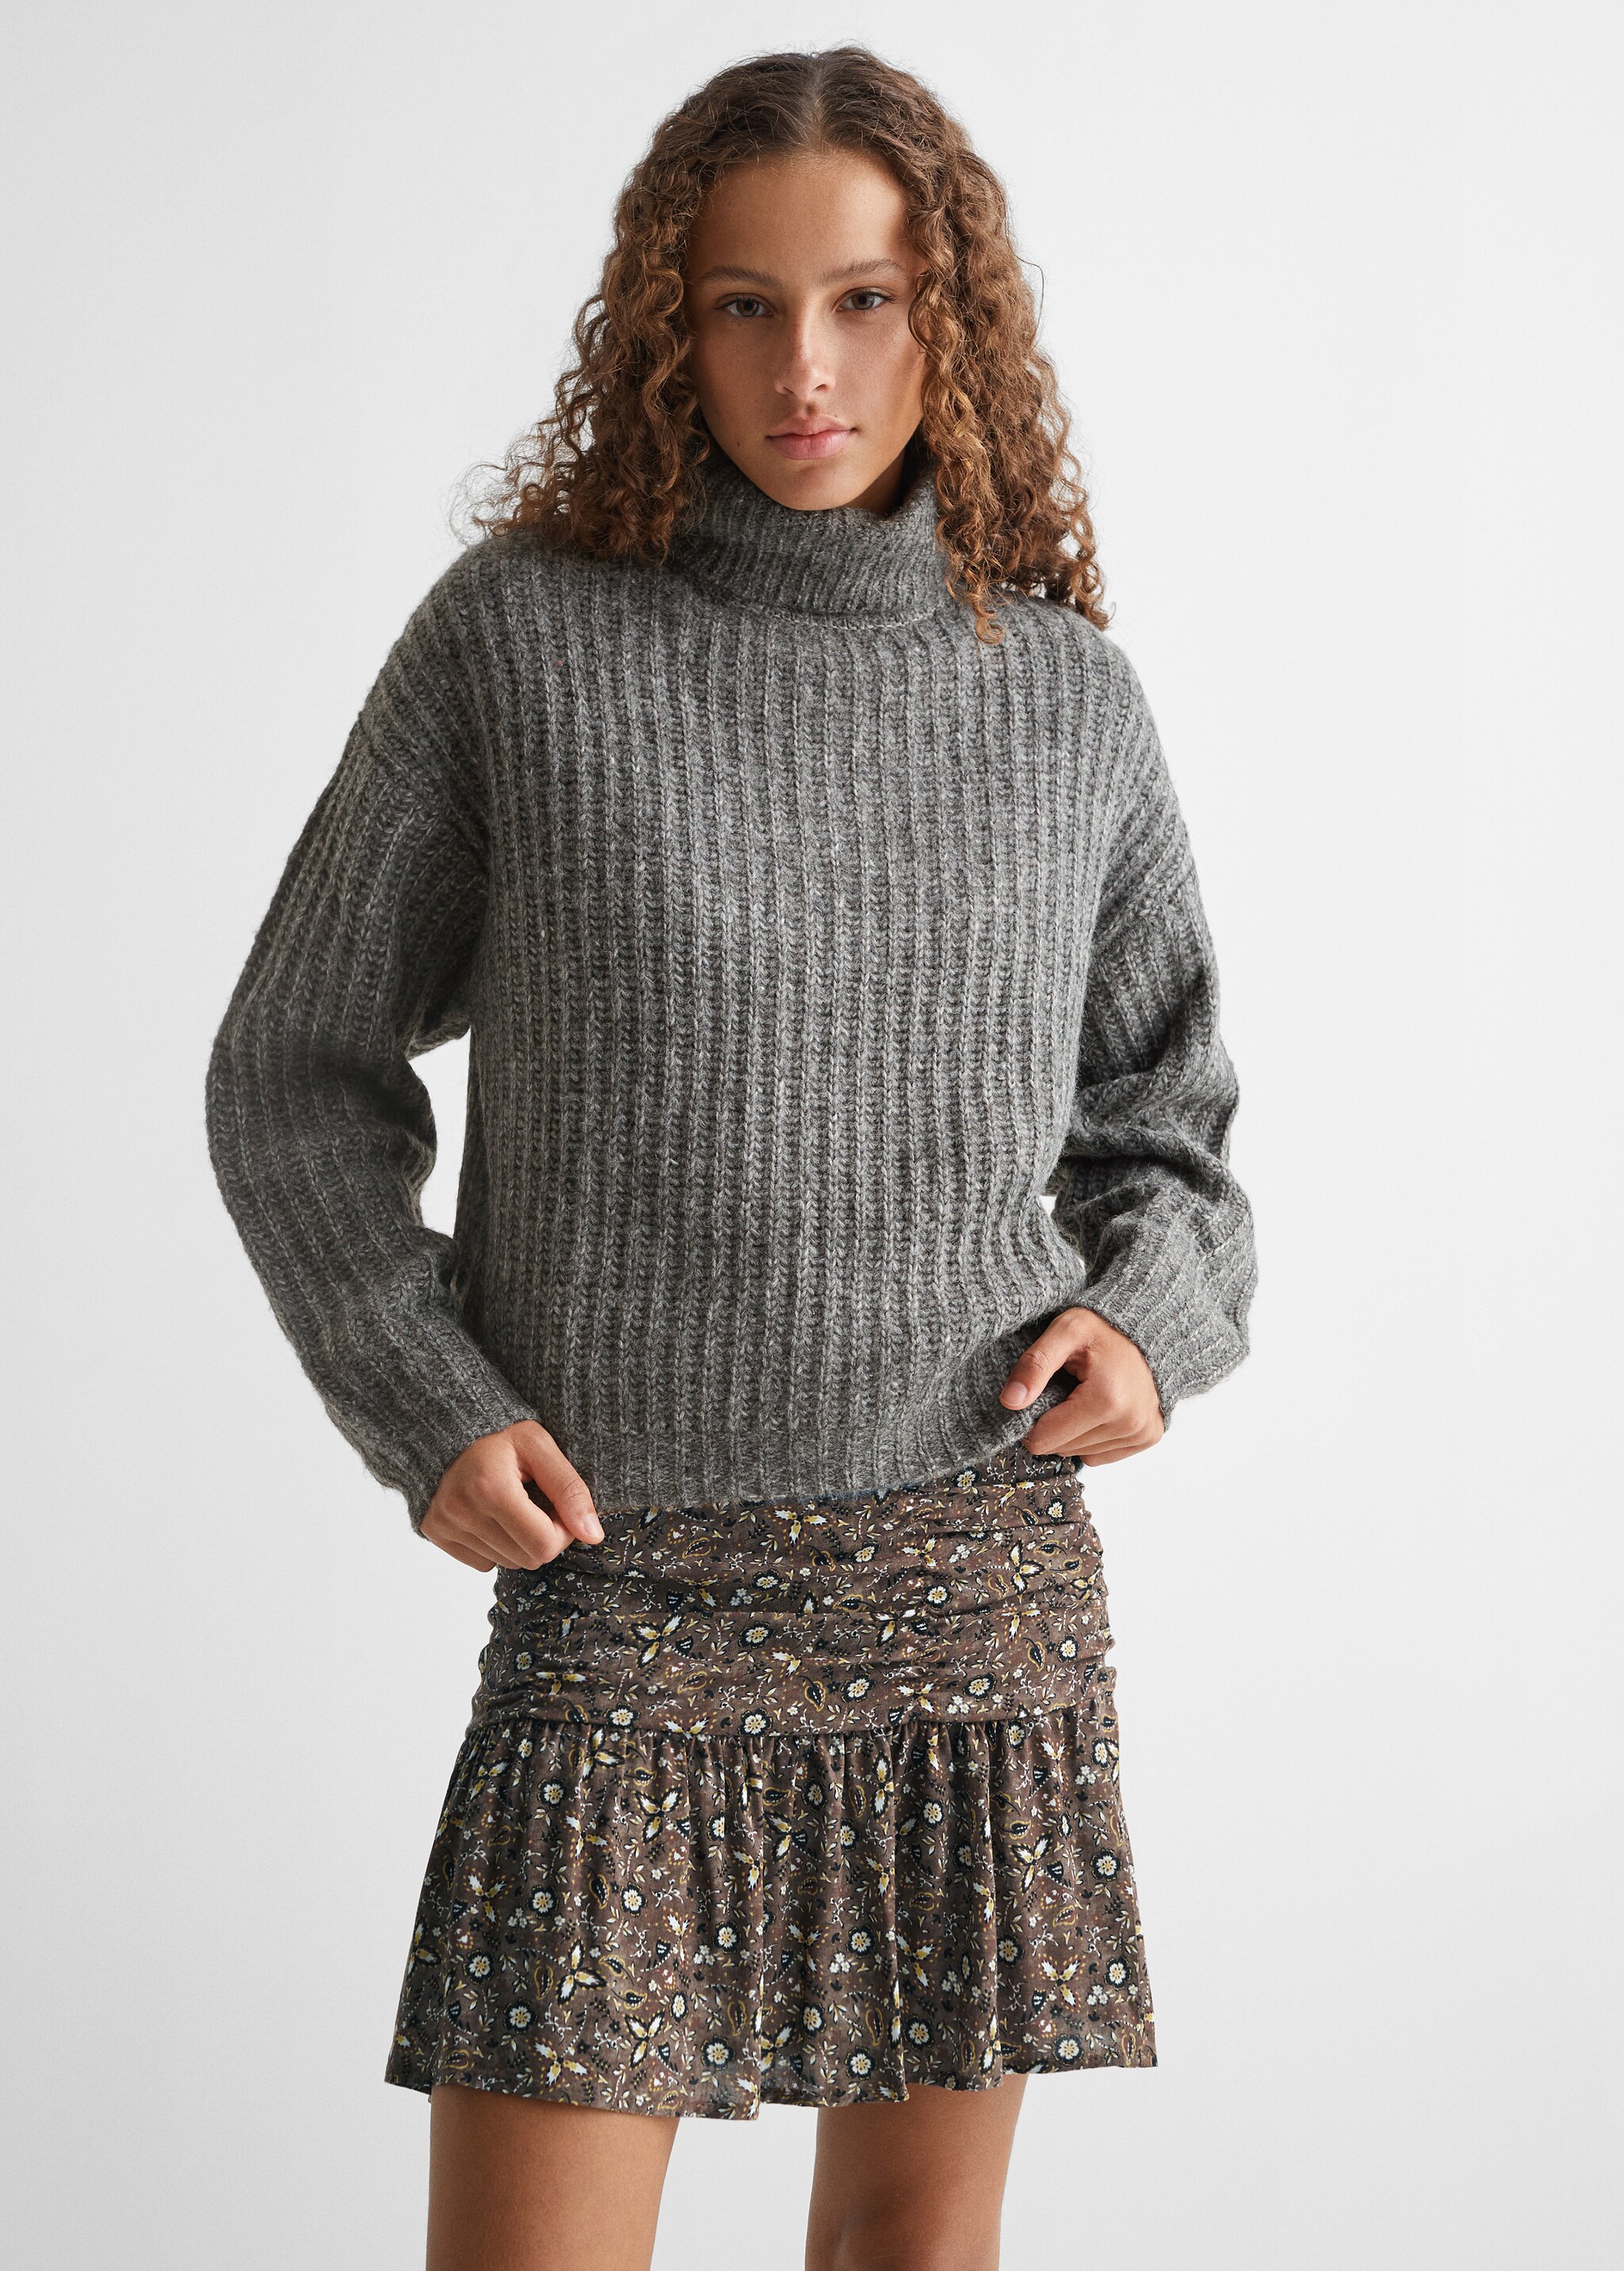 Turtleneck knitted sweater - Middenvlak